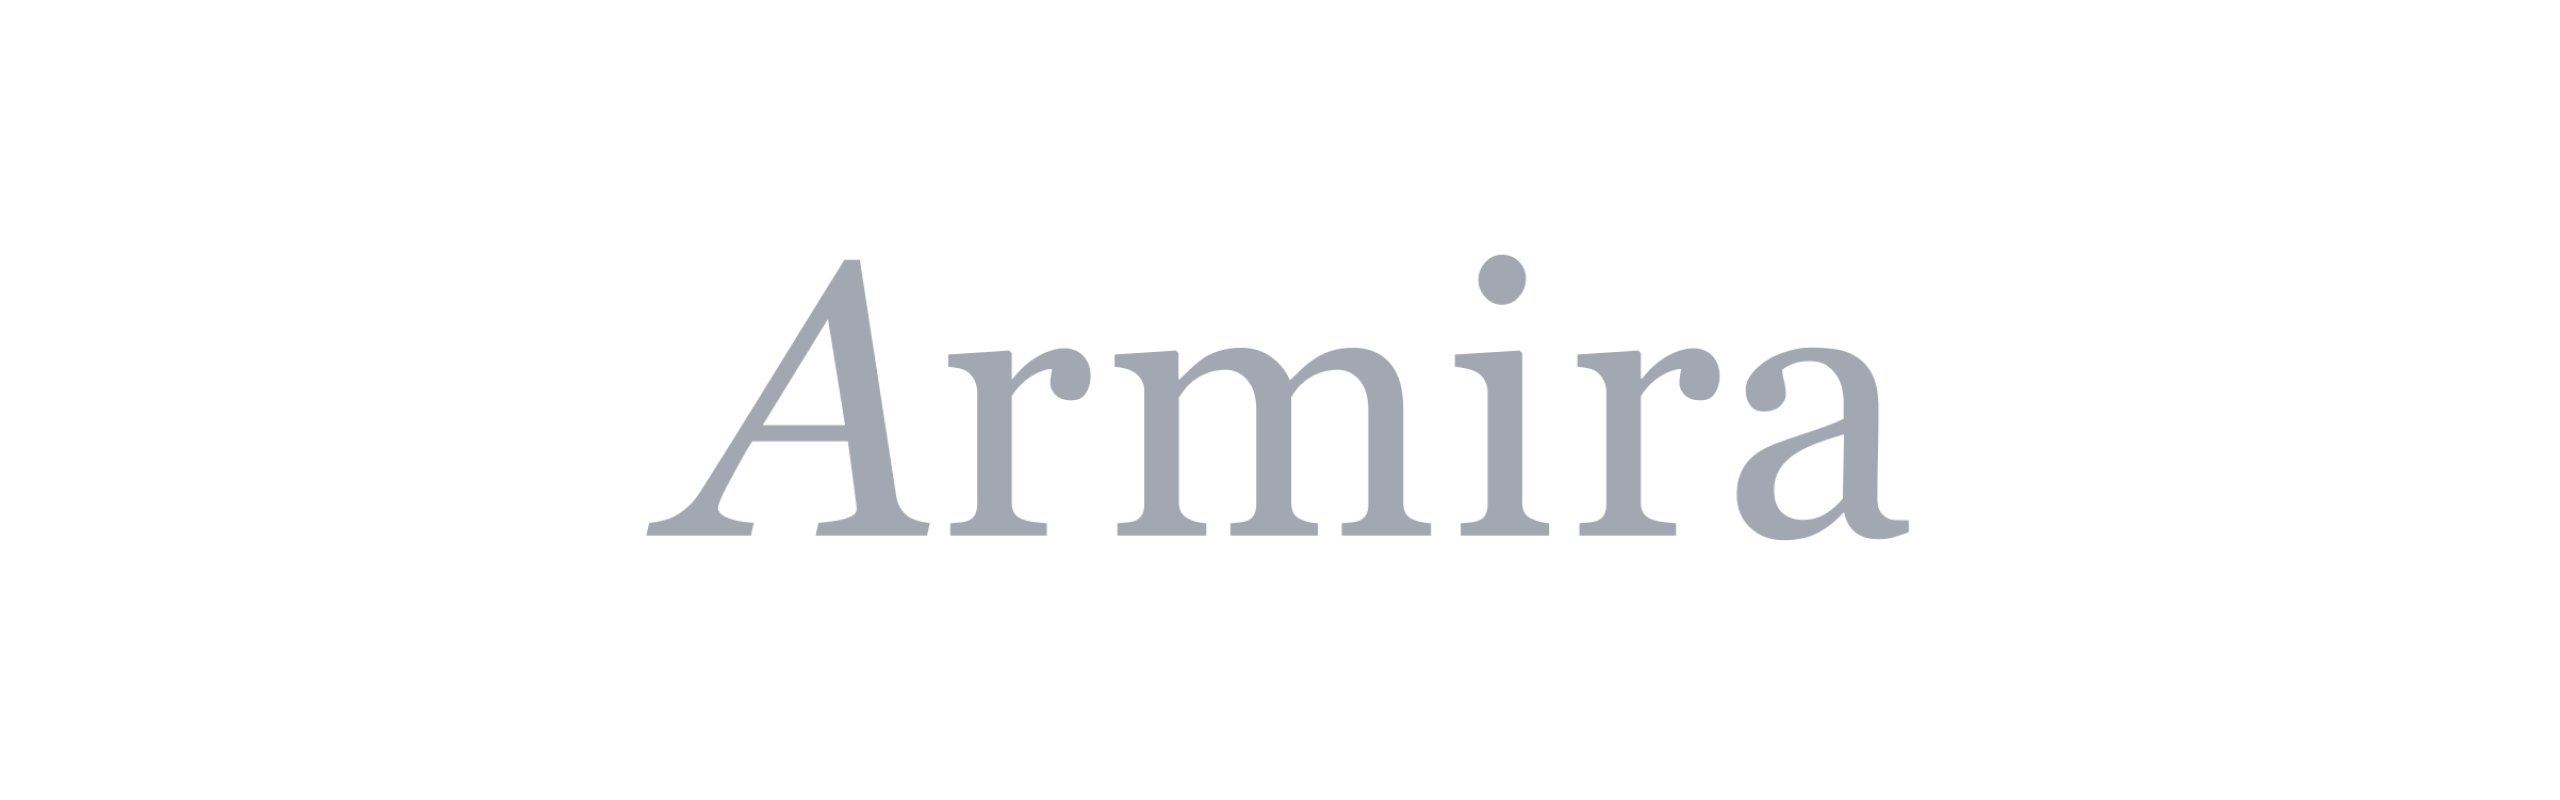 Technology & product due diligence | Code & Co. advises ARMIRA BETEILIGUNGEN (logo shown)